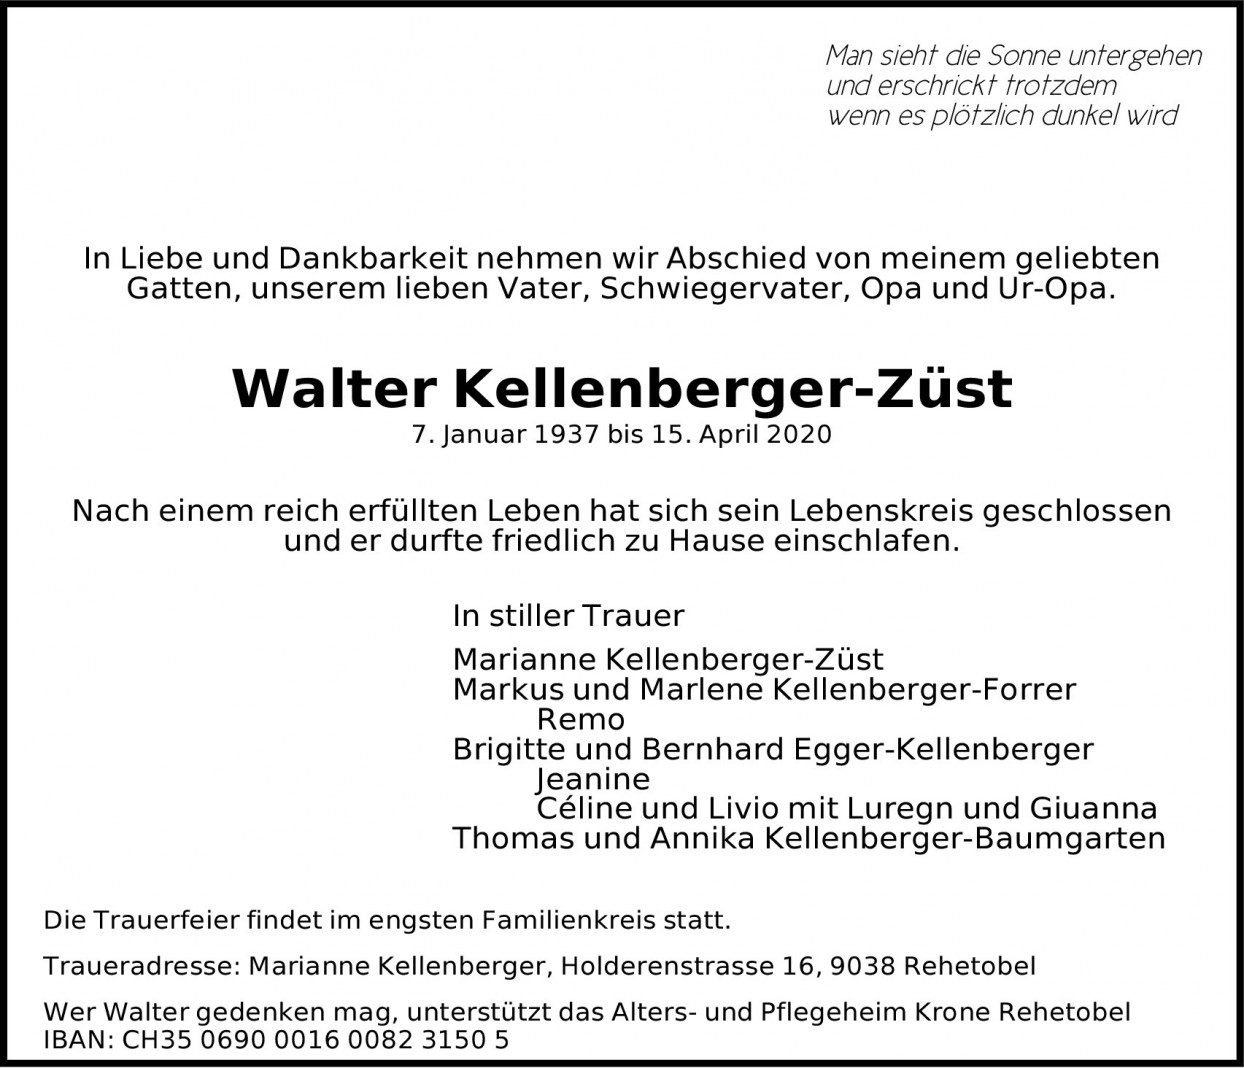 Walter Kellenberger-Züst